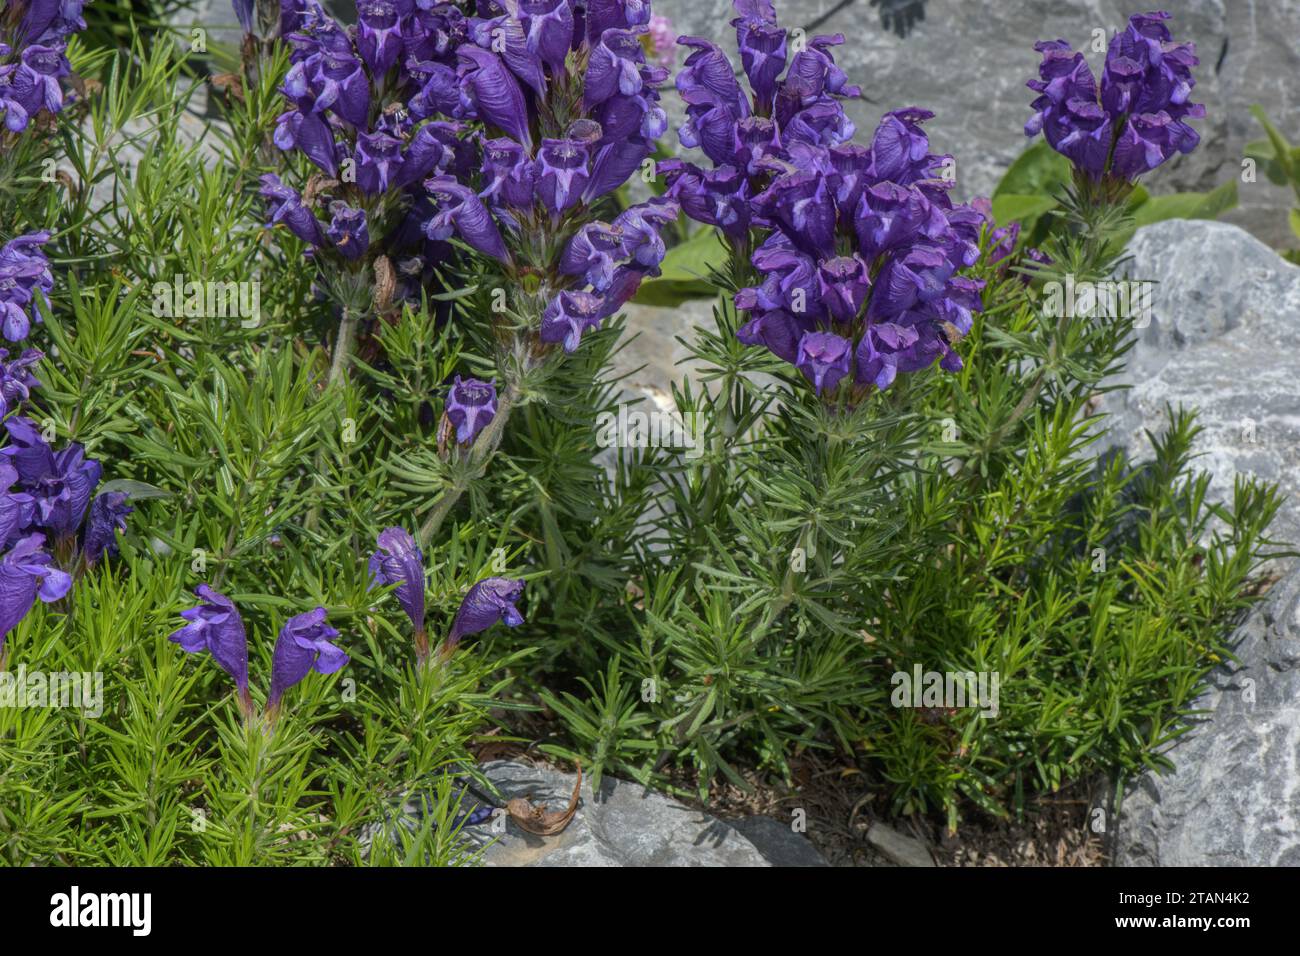 Austrian dragonhead, Dracocephalum austriacum in flower in the Alps. Stock Photo